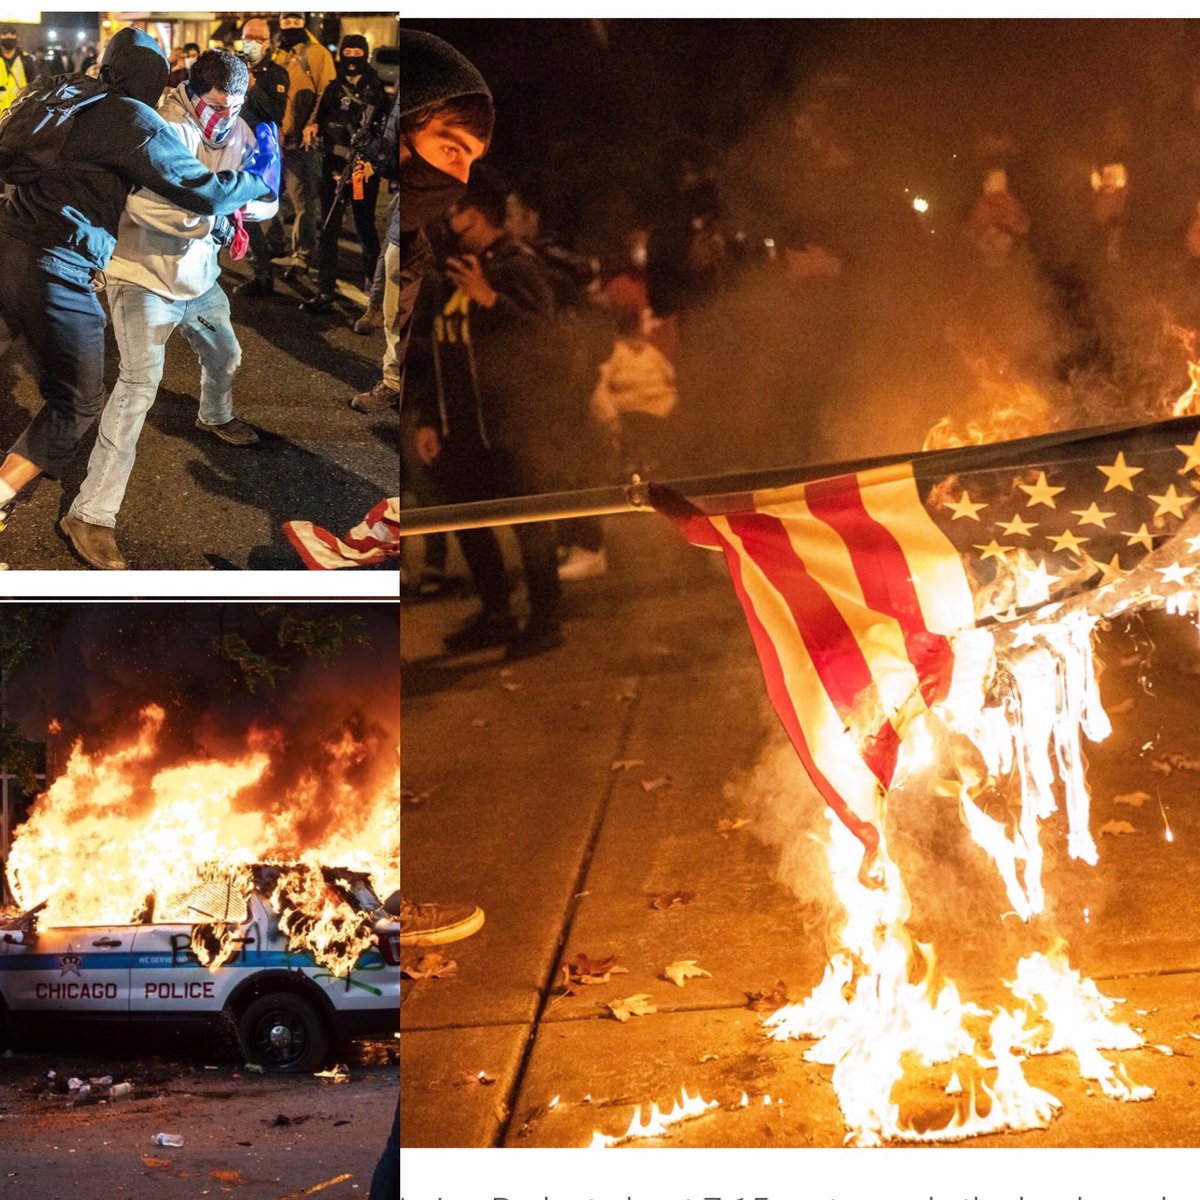 #BLMriots #AntifaRiots #SummerOfLove #BailOut #PipeBomber #RayEpps #setup #PoliticalPrisoners #democrats